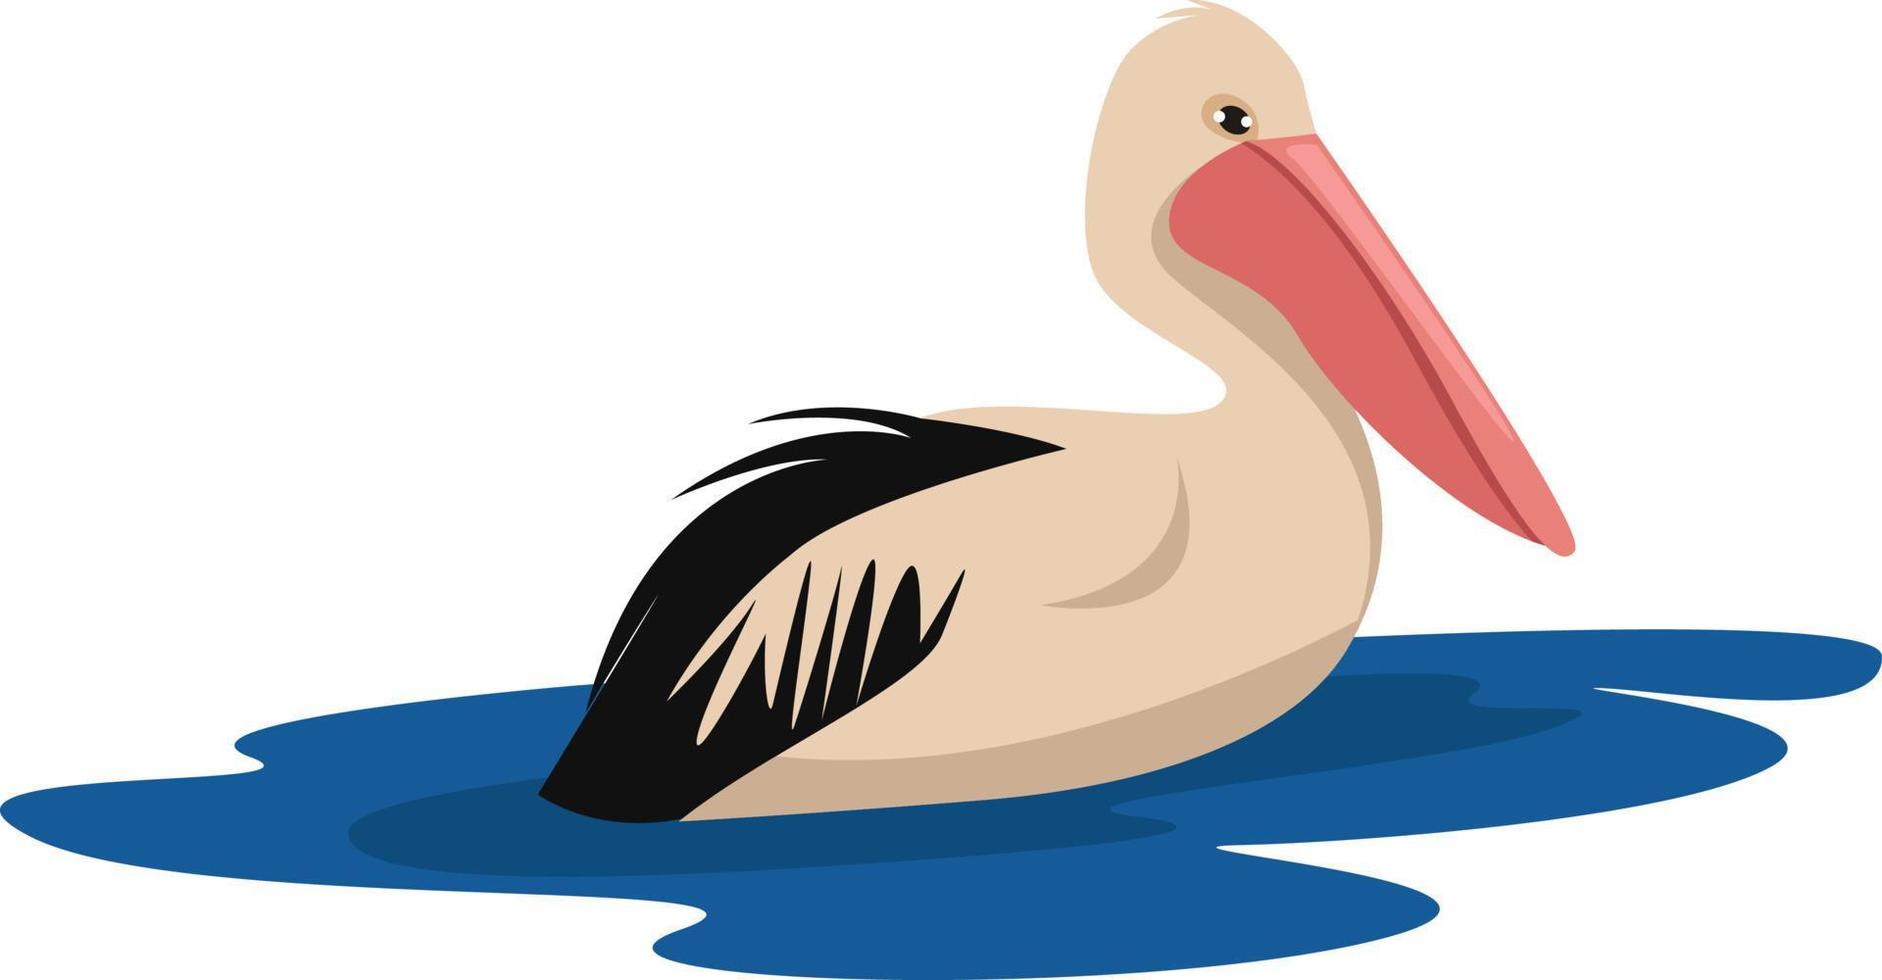 Sad pelican, illustration, vector on white background.